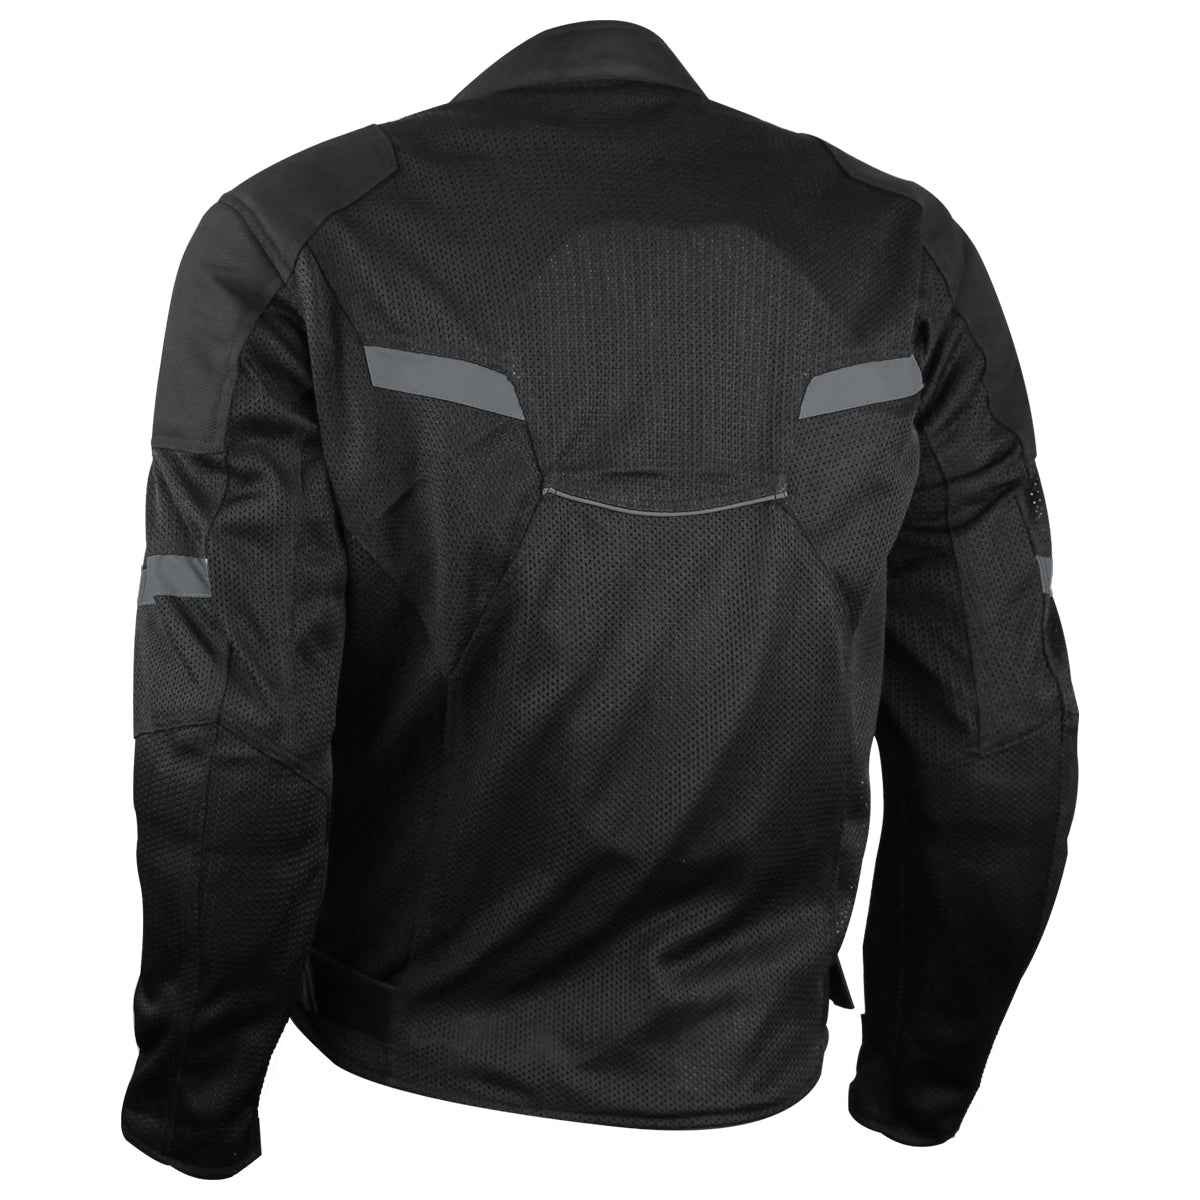 Rev'it APEX TL Sport Motorcycle Jacket White Black For Sale Online -  Outletmoto.eu